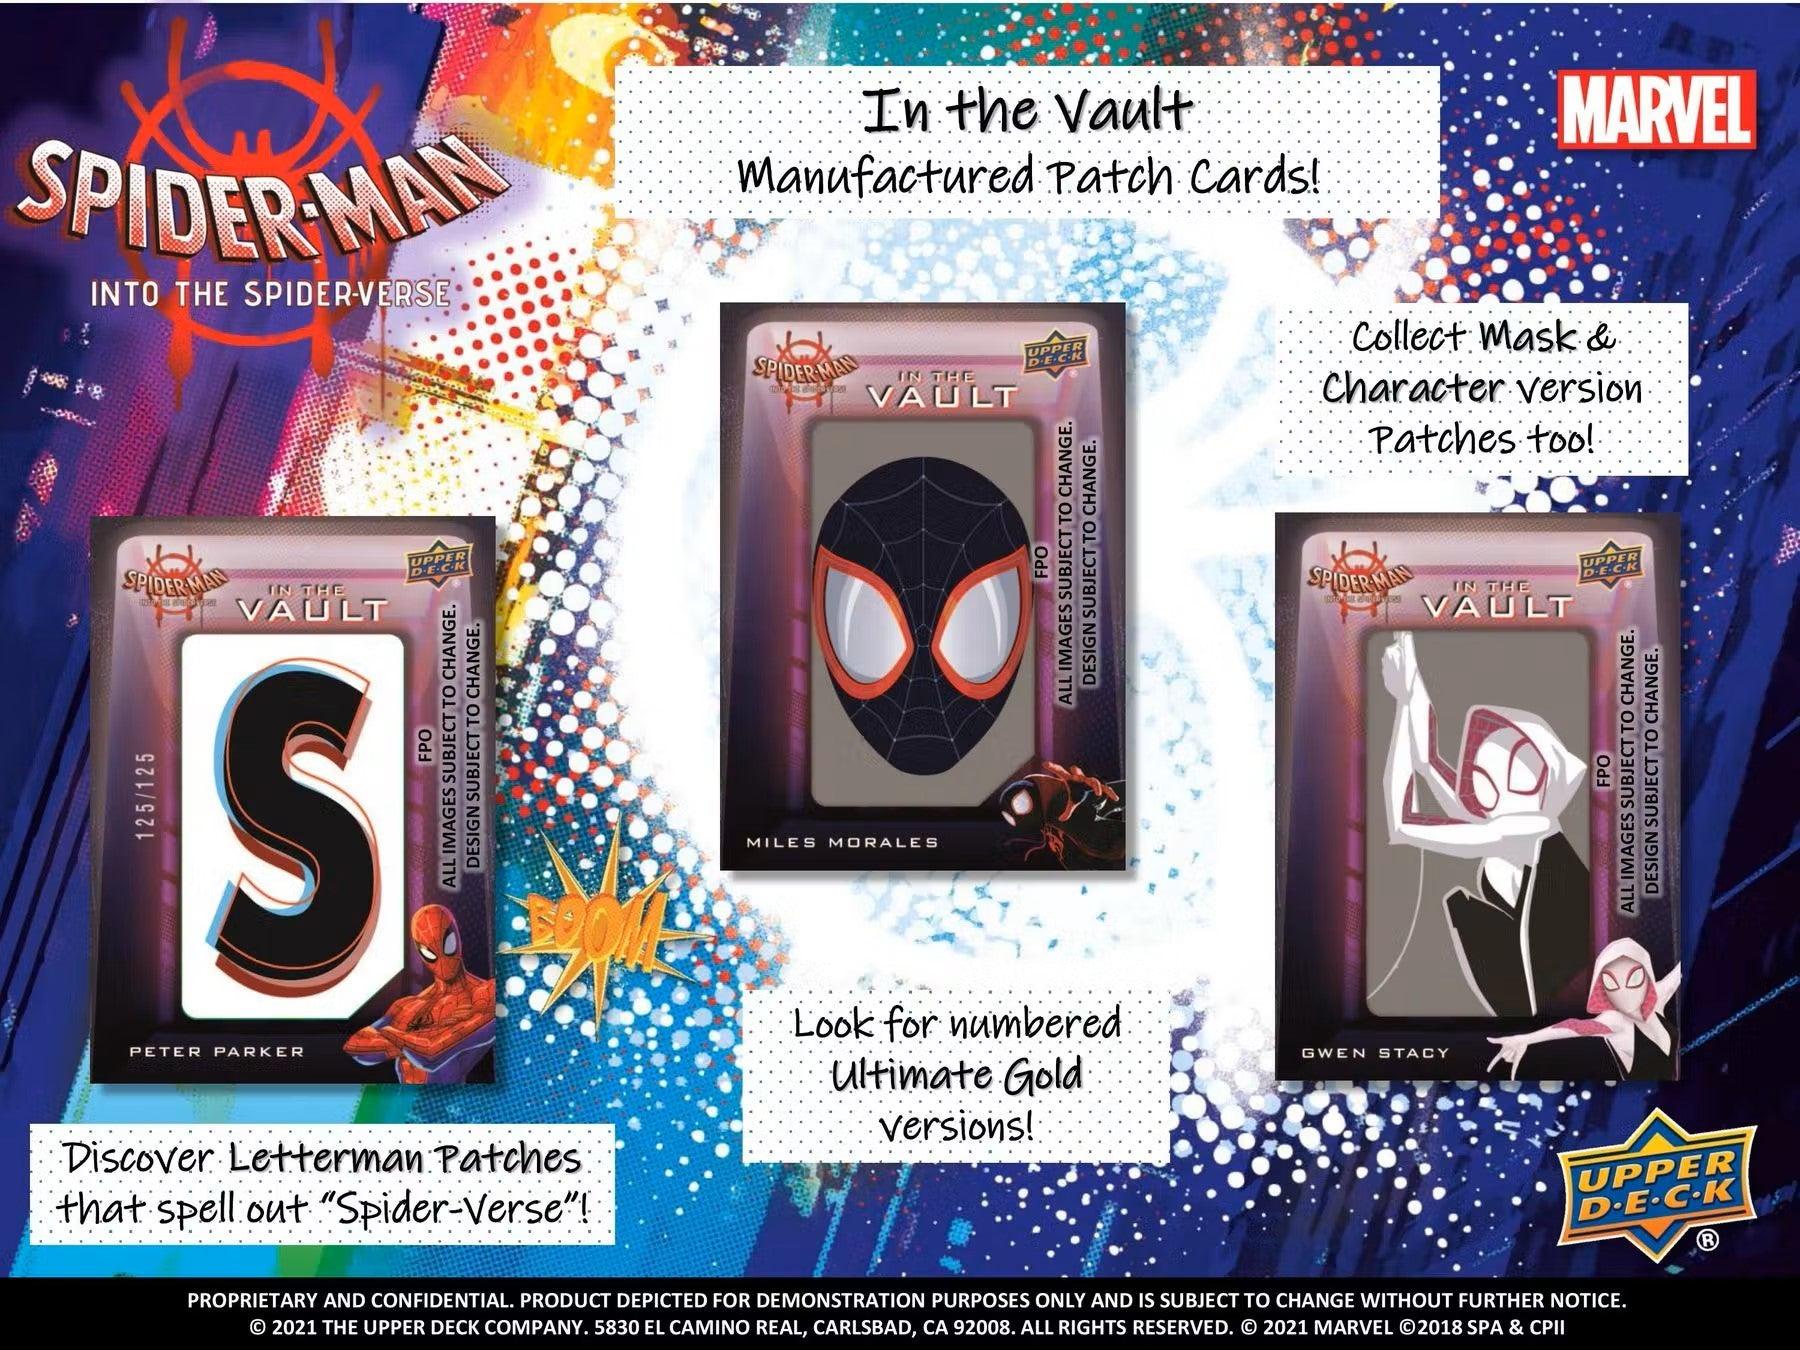 Marvel - 2022 Upper Deck - Spider-Man Into the Spider-Verse - Hobby Box (15 Packs) - Hobby Champion Inc